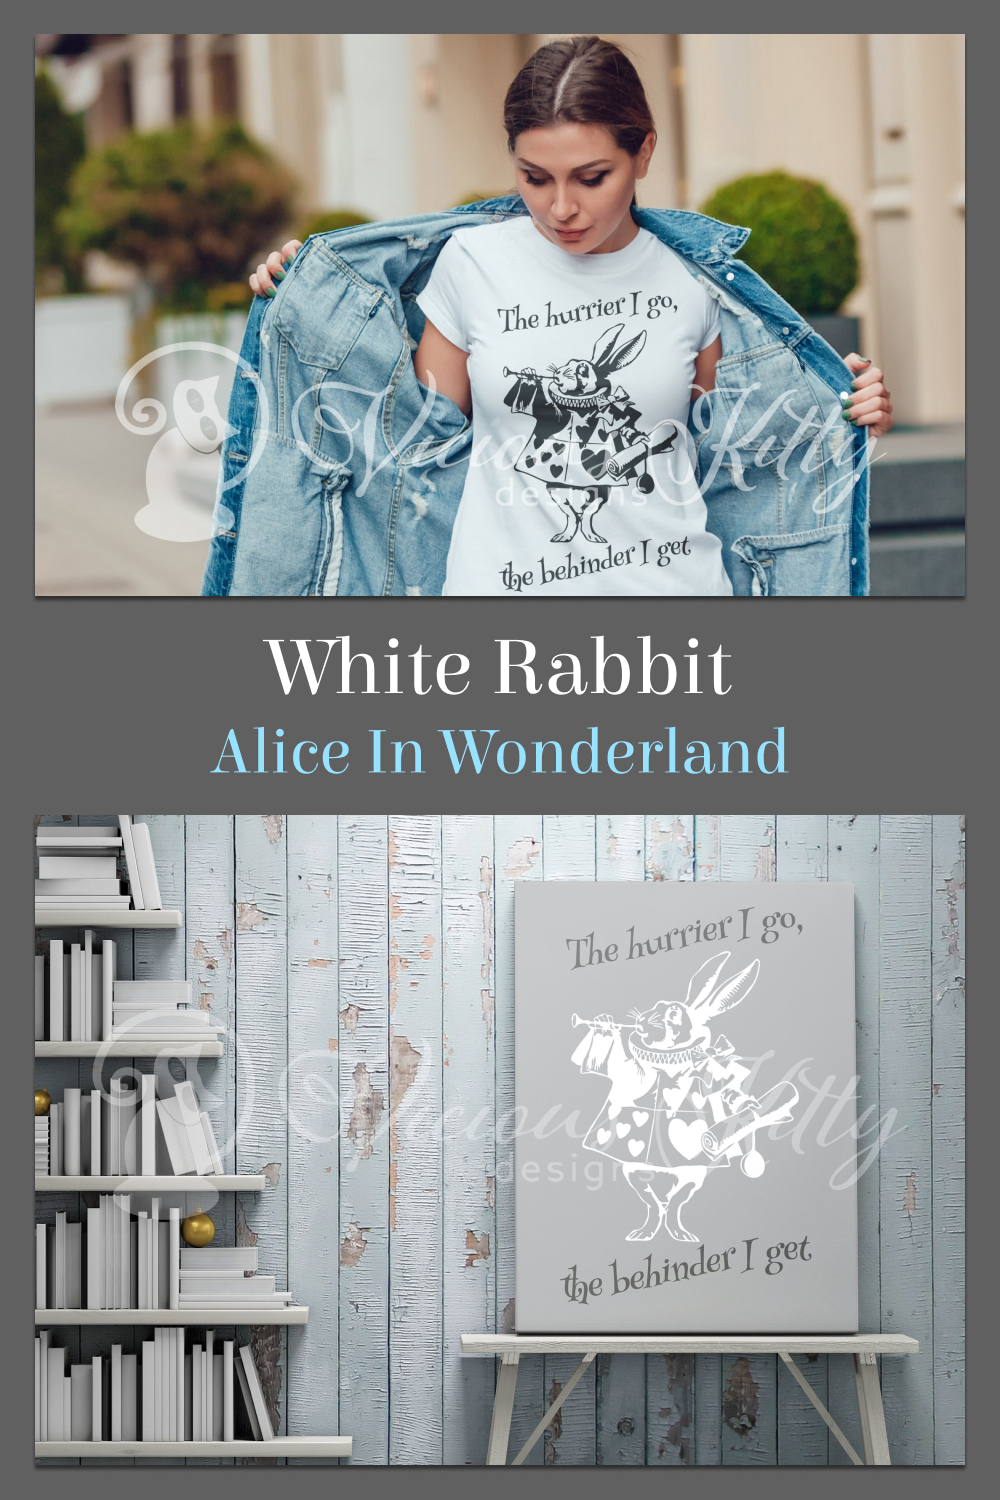 White rabbit alice in wonderland of pinterest.